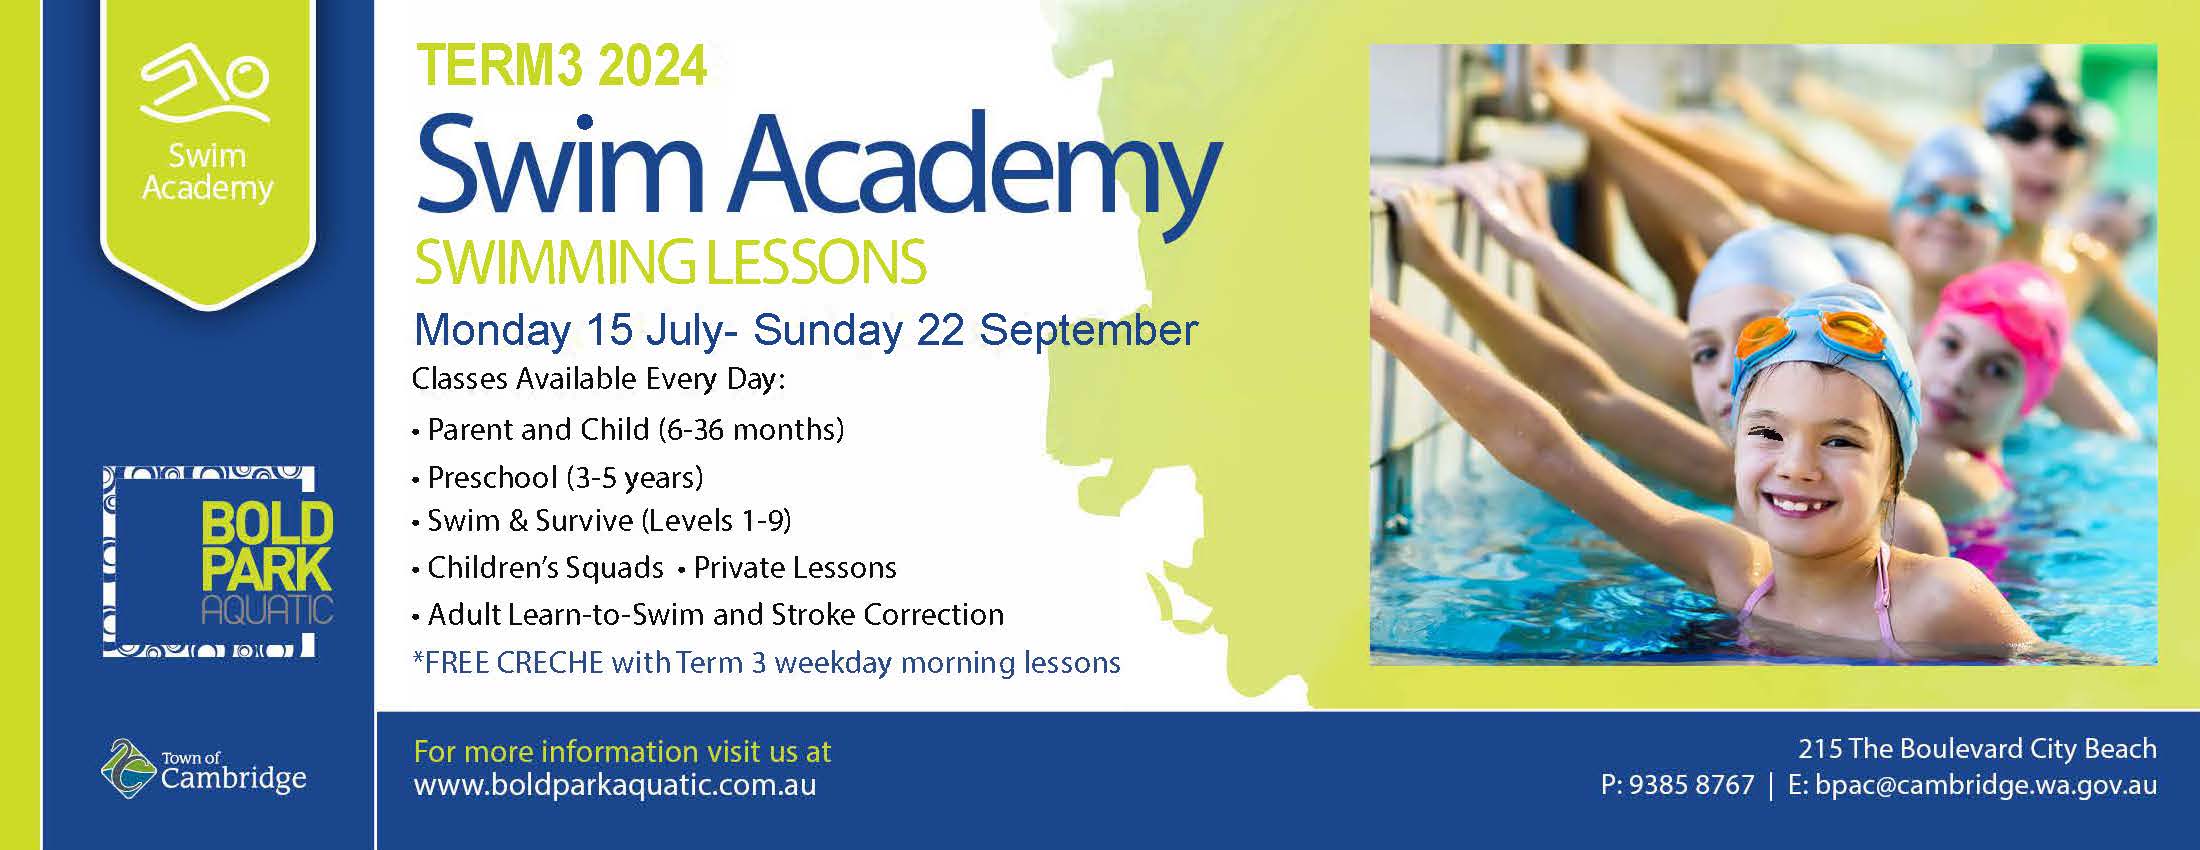 Swim-Academy-Term-3-2024-Website-Banner.jpg